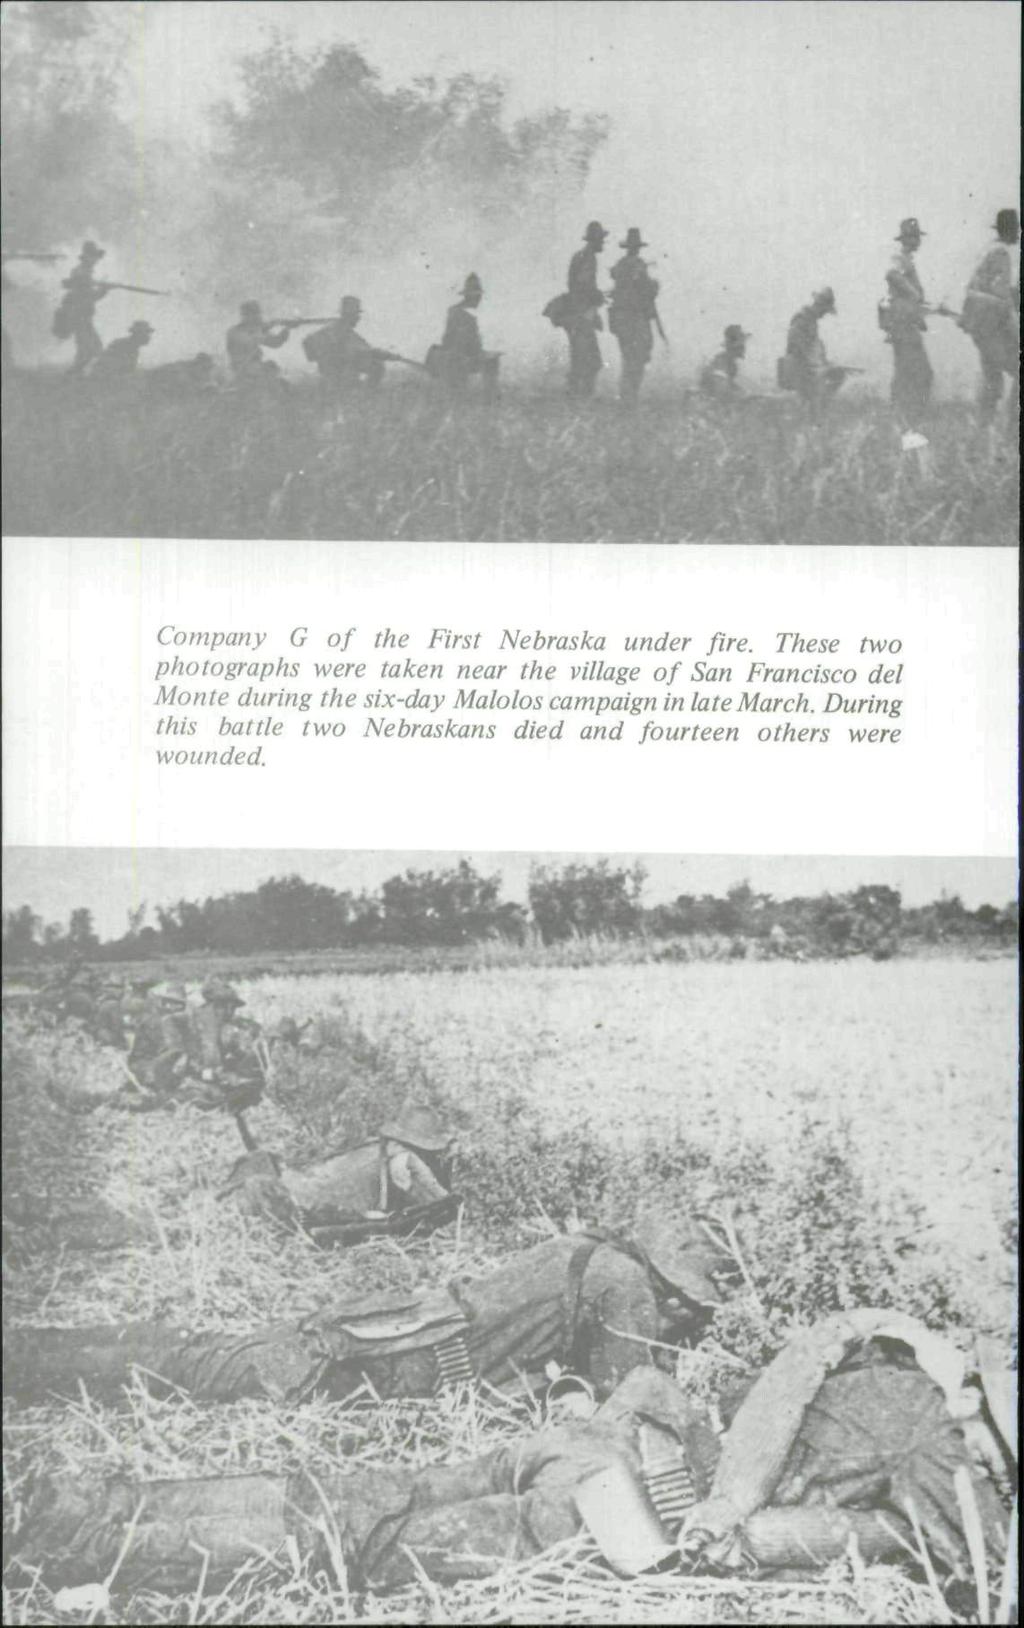 Company G of the First Nebraska under fire.